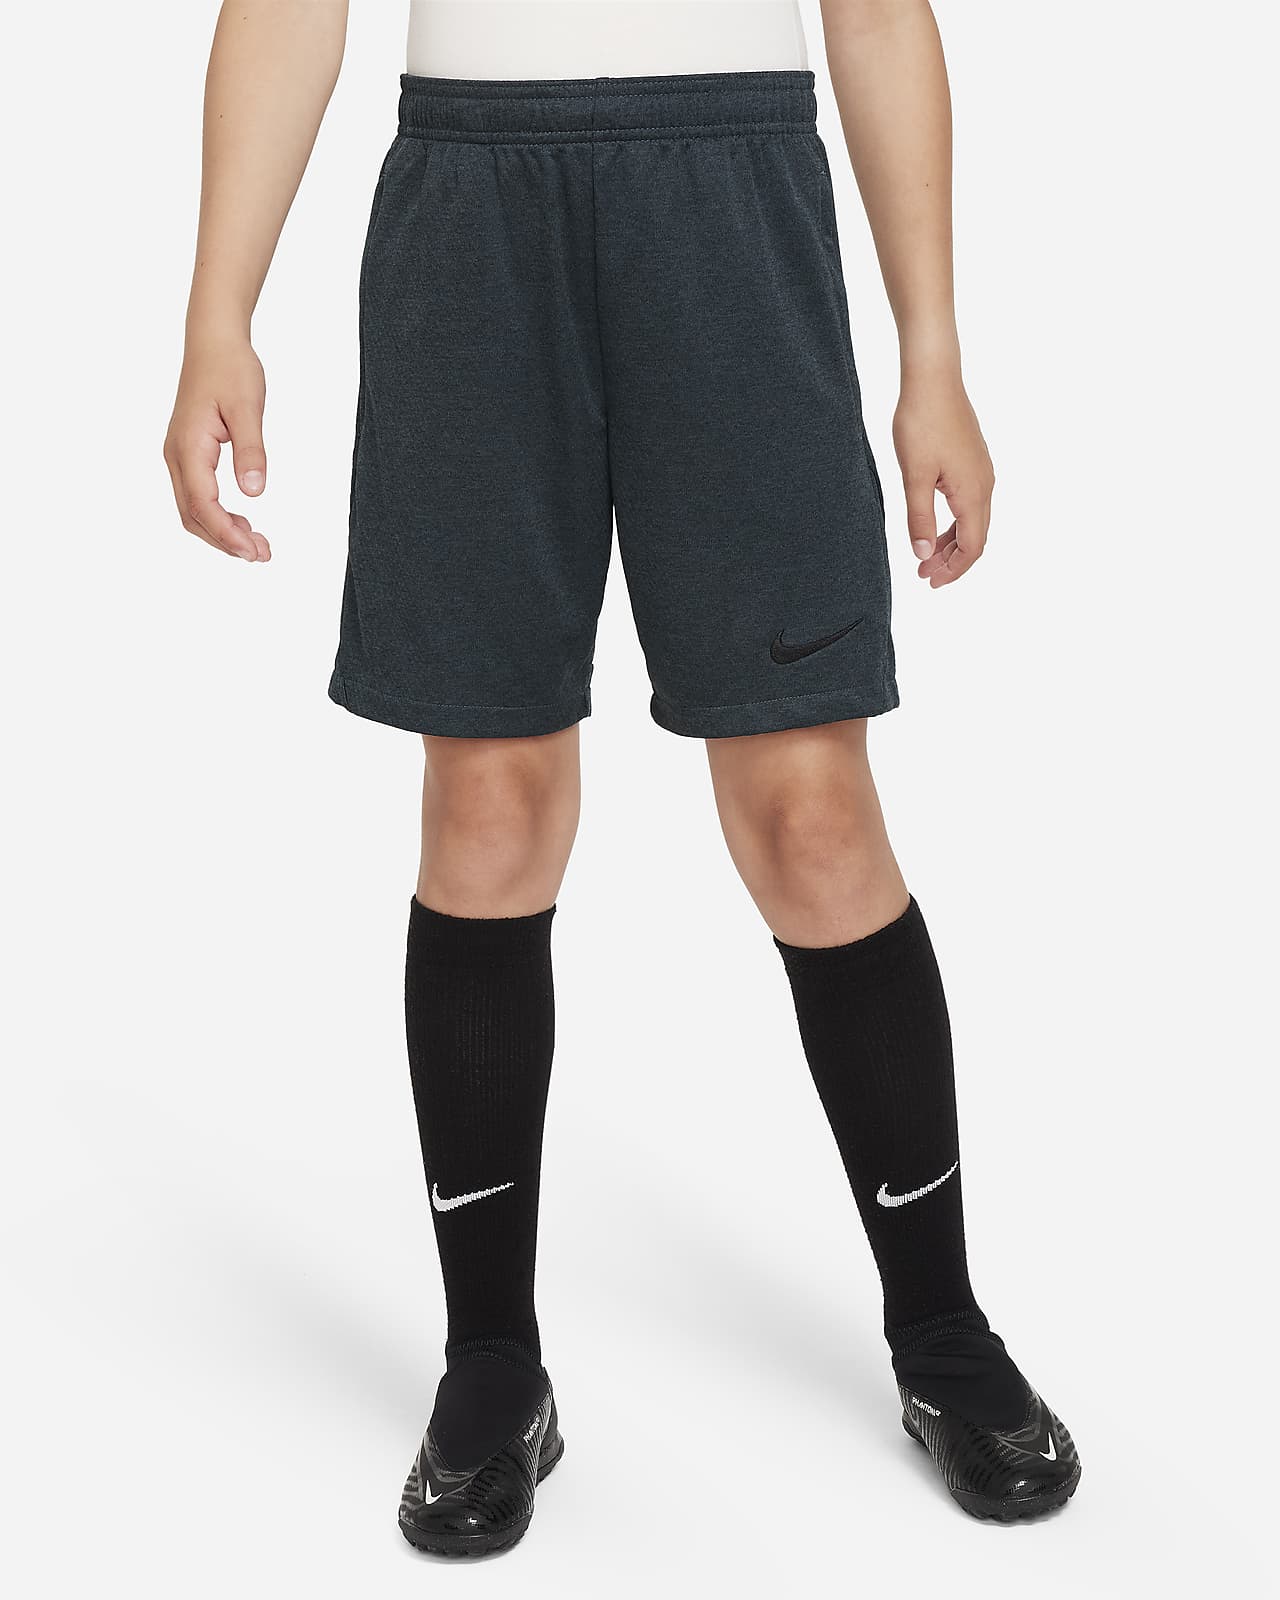 Nike Dri-FIT Academy Big Soccer Shorts. Kids